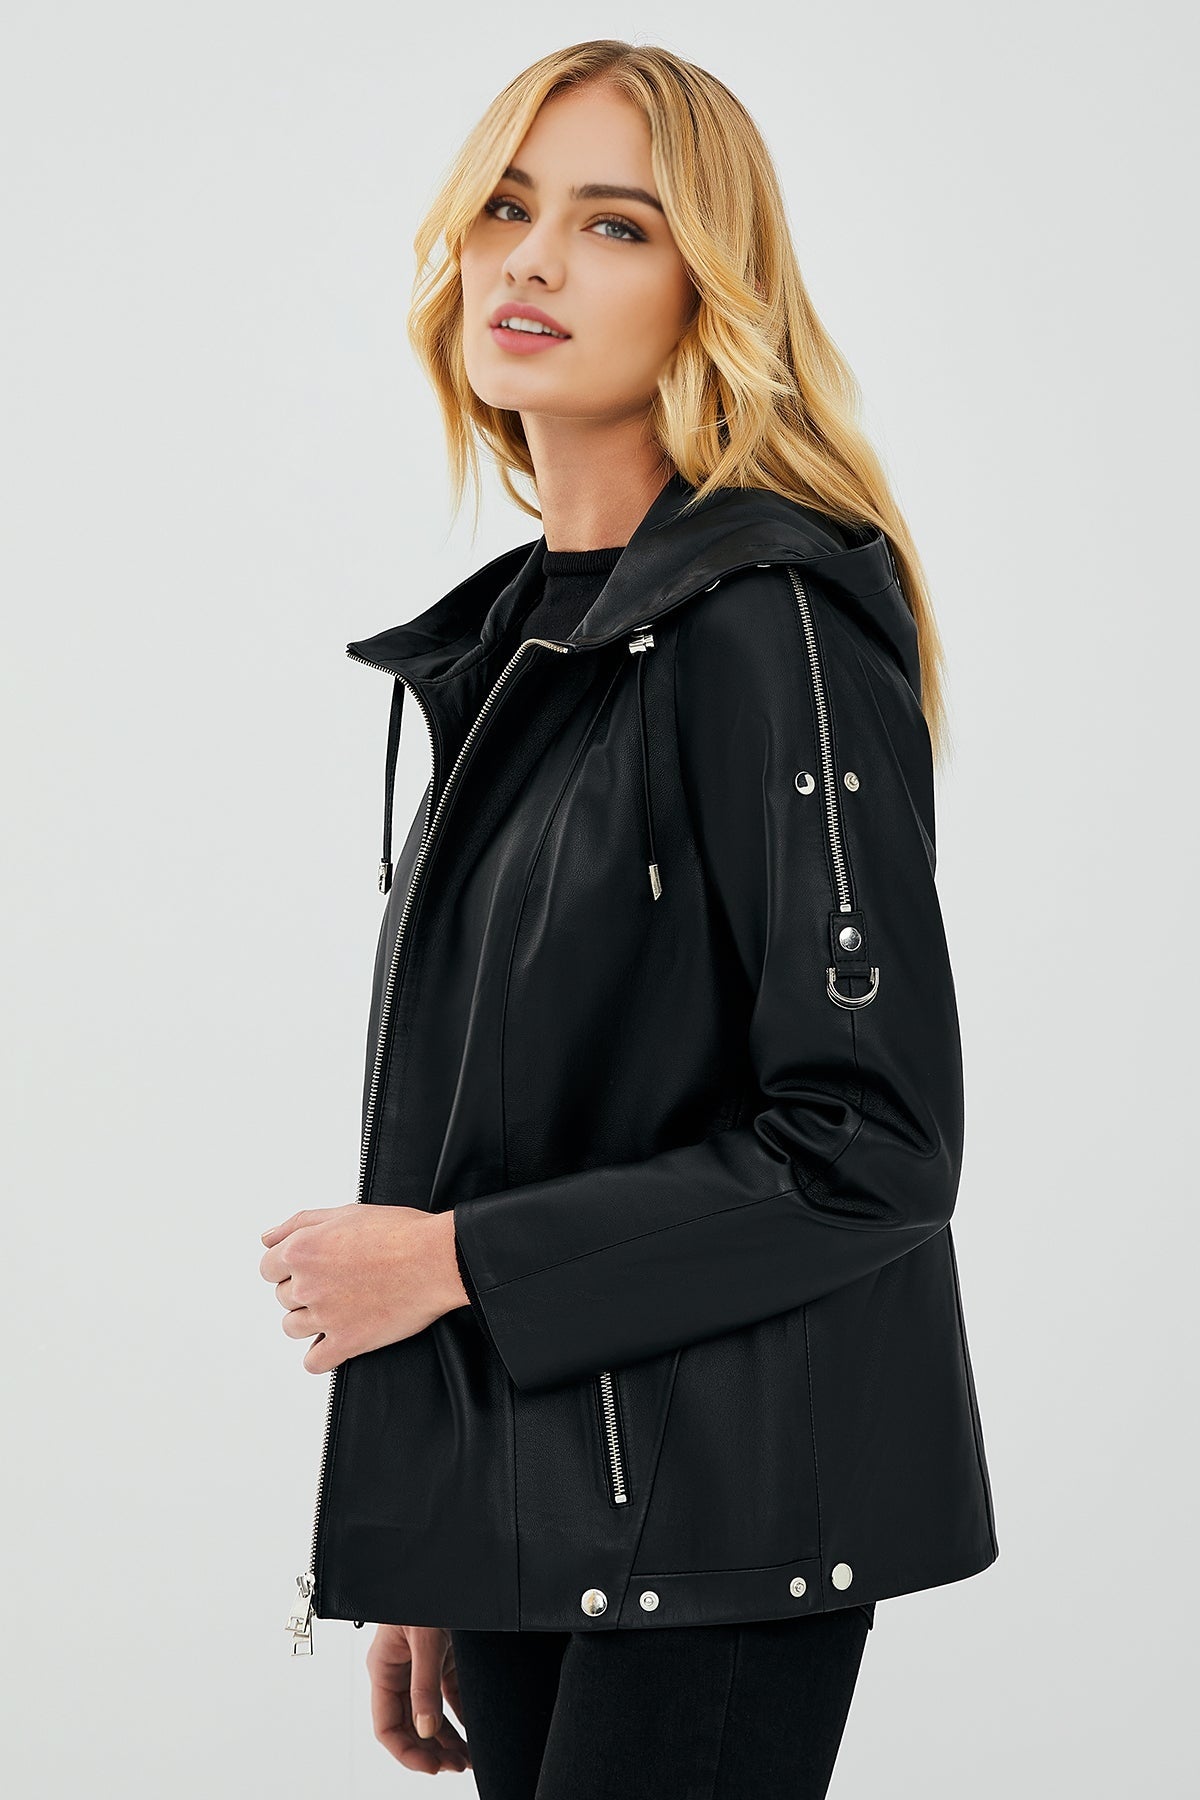 Judith Women's Black Hooded Leather Coat